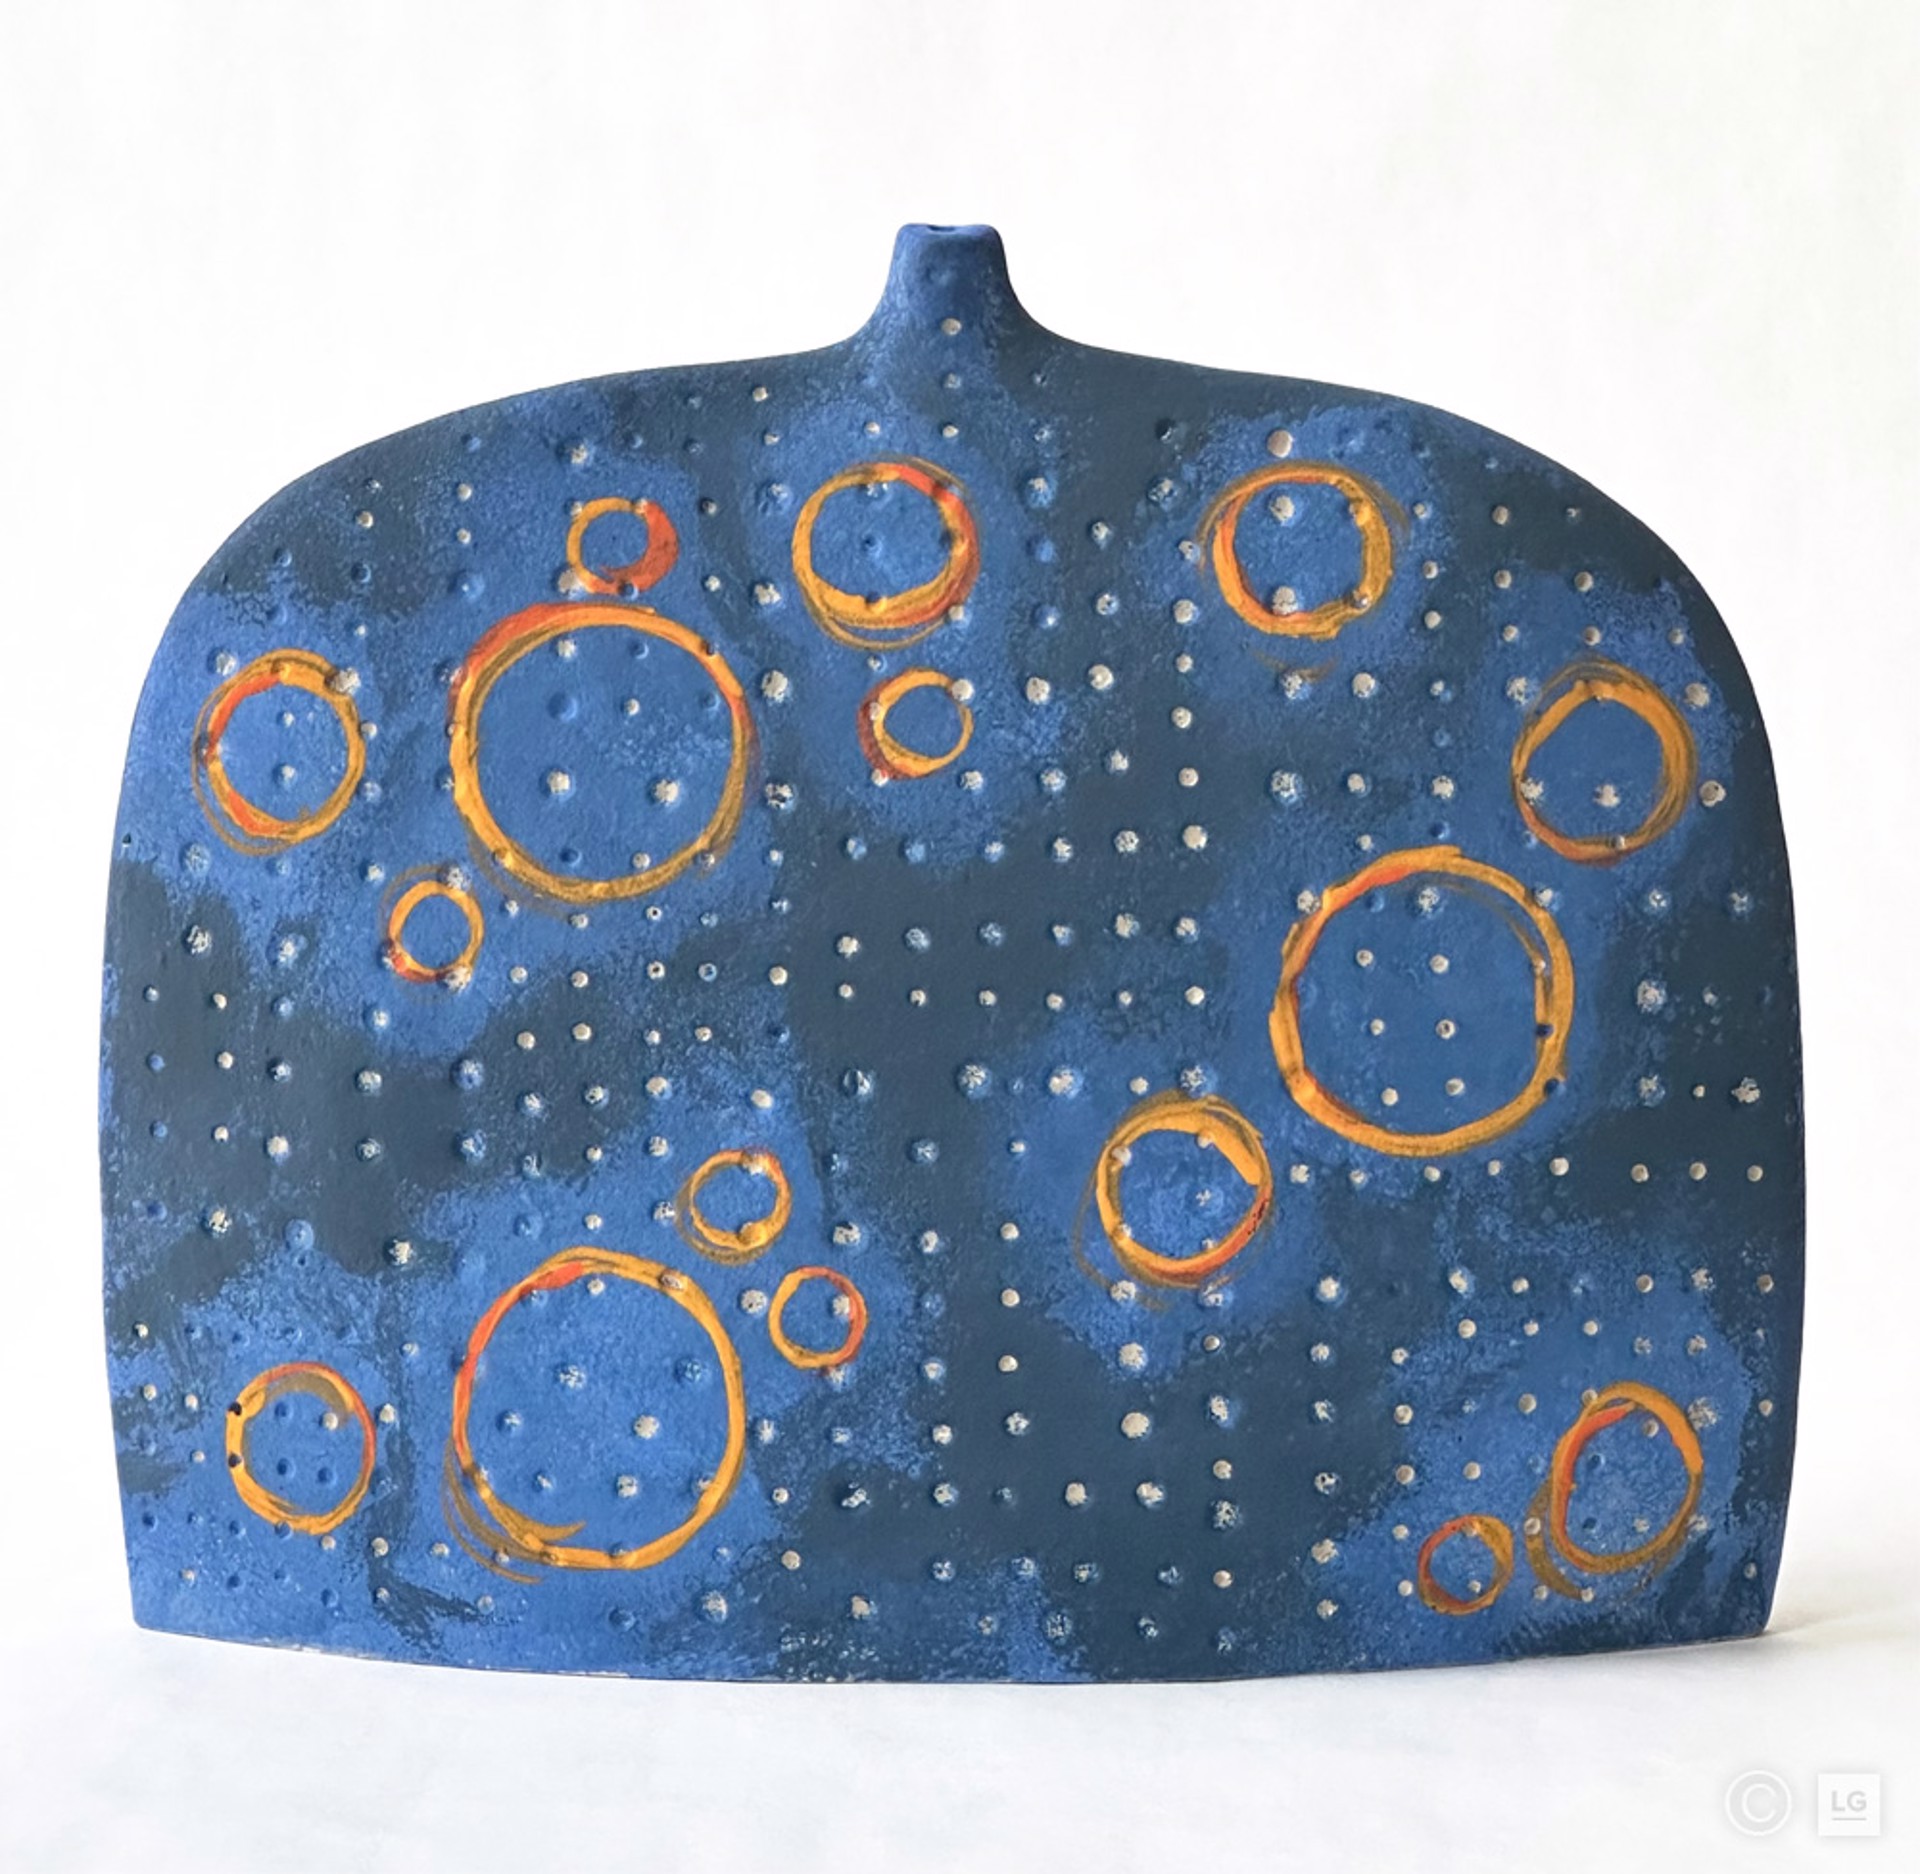 Indi - Blue with Orange Circles by Joanne Rebek